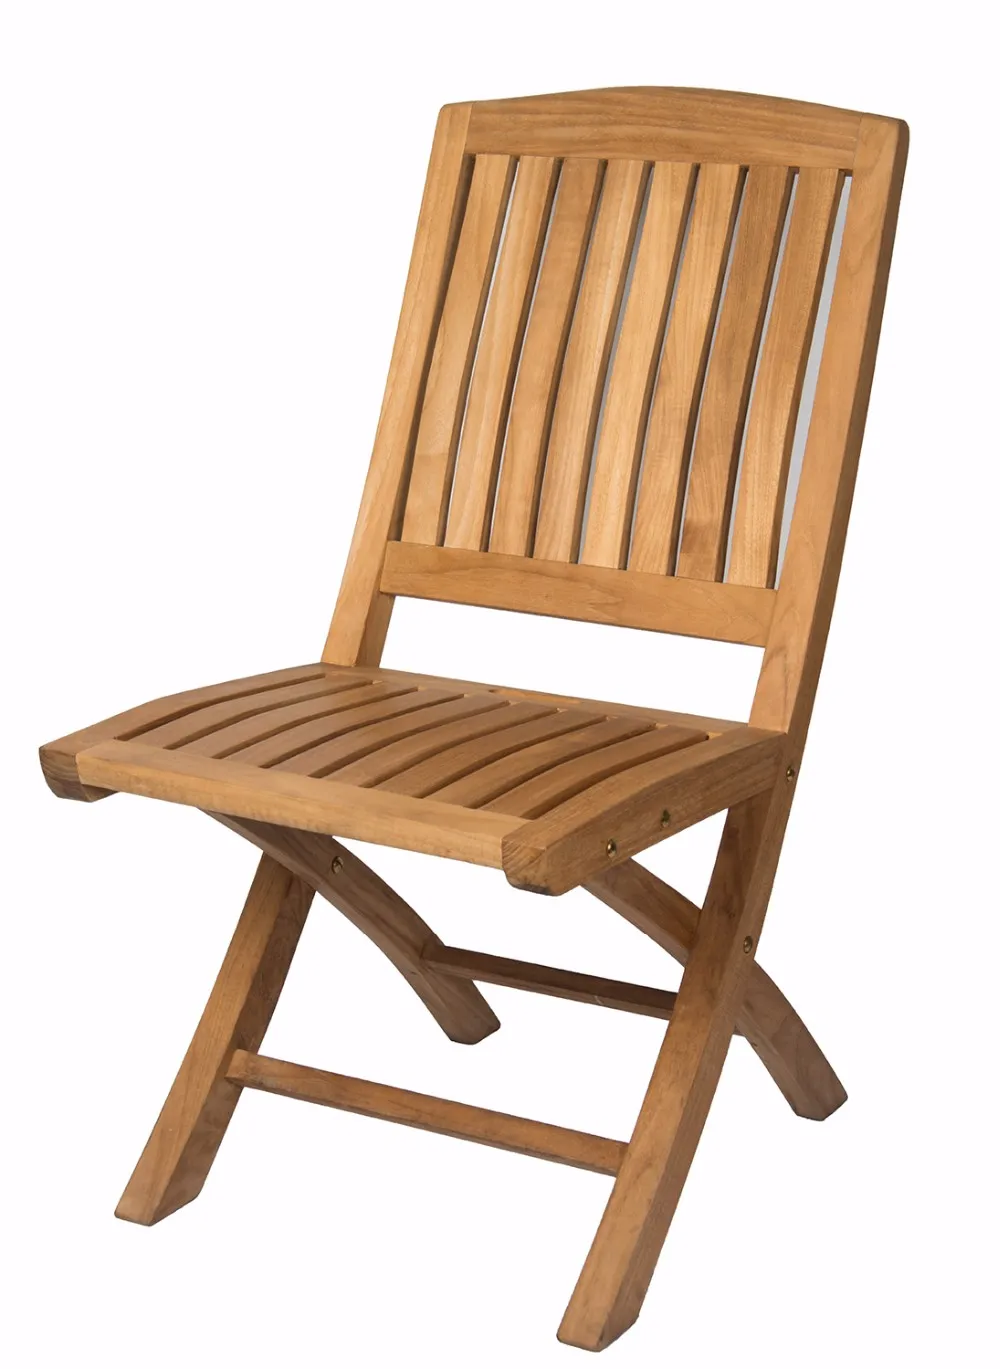 Wooden Garden Furniture Inate Chair Buy Outdoor Garden Chair